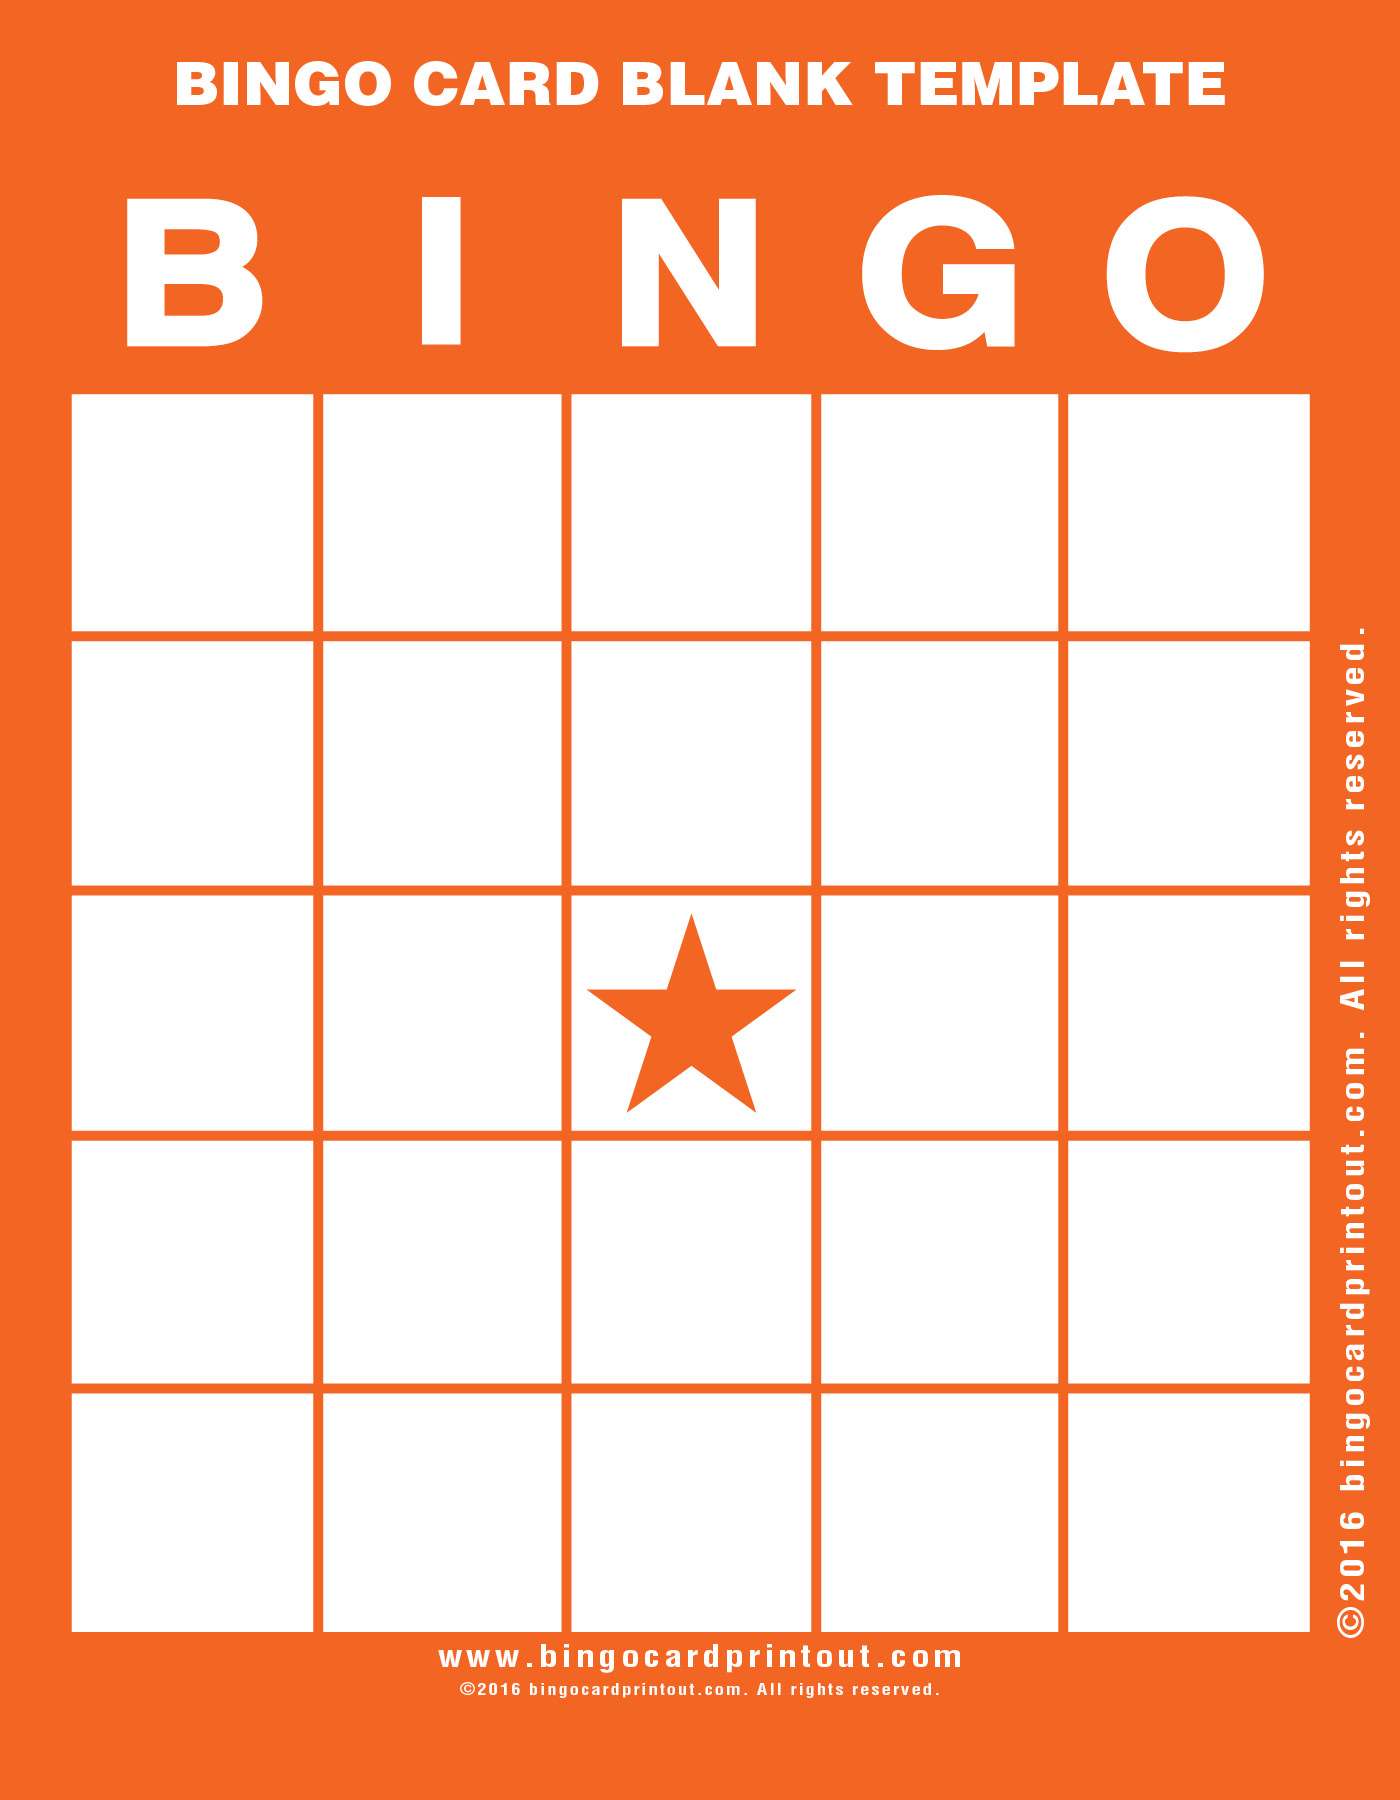 009 Bingo Card Blank Template Stirring Ideas For Baby Shower In Bingo Card Template Word